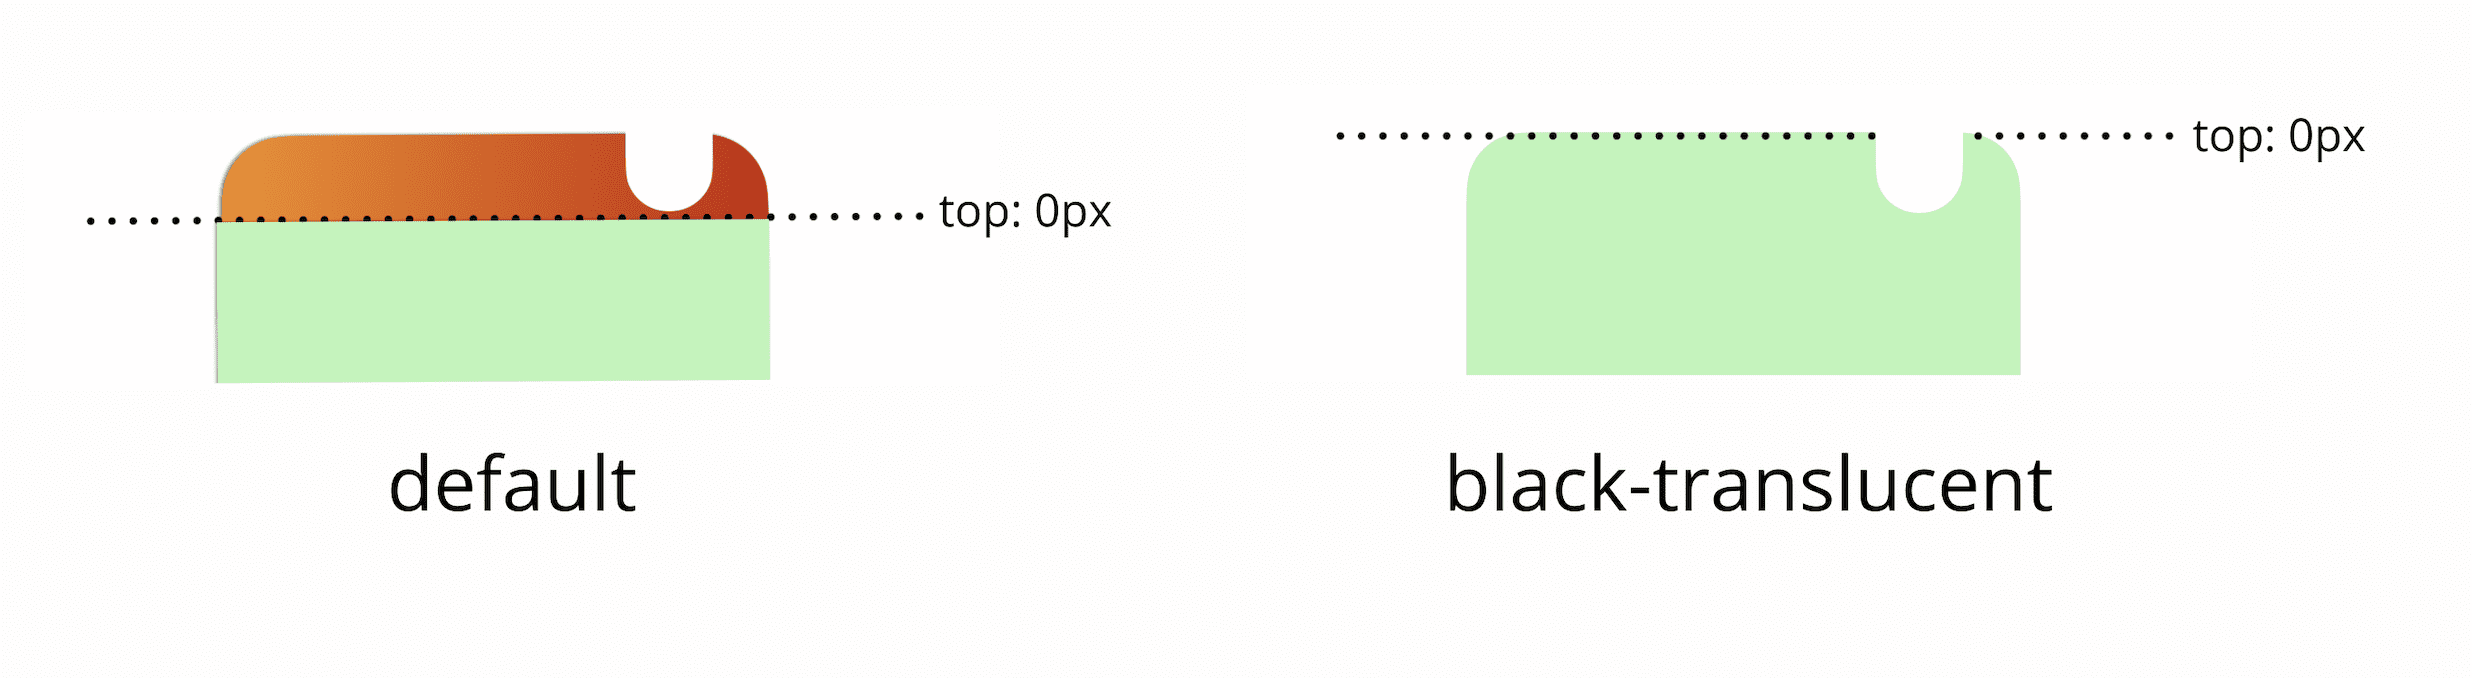 0px بالایی نمایپورت شما به طور پیش فرض زیر نوار وضعیت قرار دارد. اگر یک متا تگ مشکی شفاف اضافه کنید، 0 پیکسل بالای نمای شما با بالای فیزیکی صفحه مطابقت دارد.